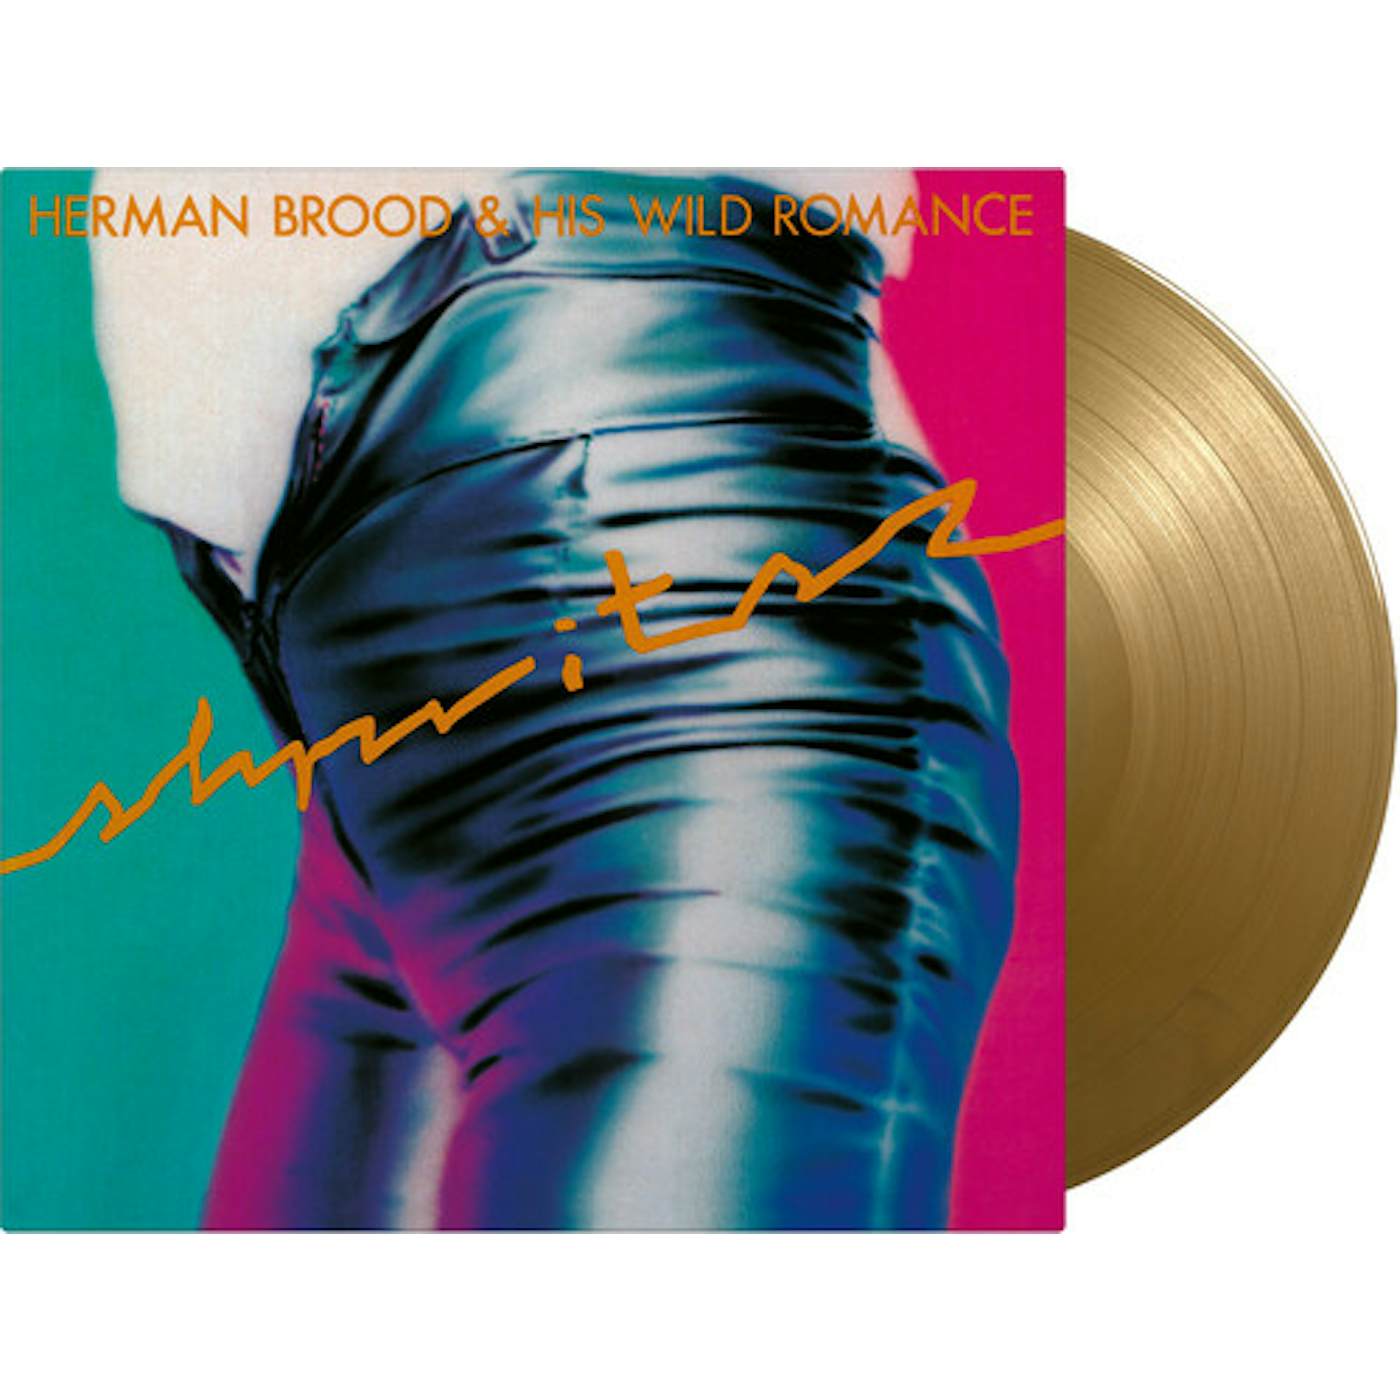 Herman Brood SHPRITSZ Vinyl Record